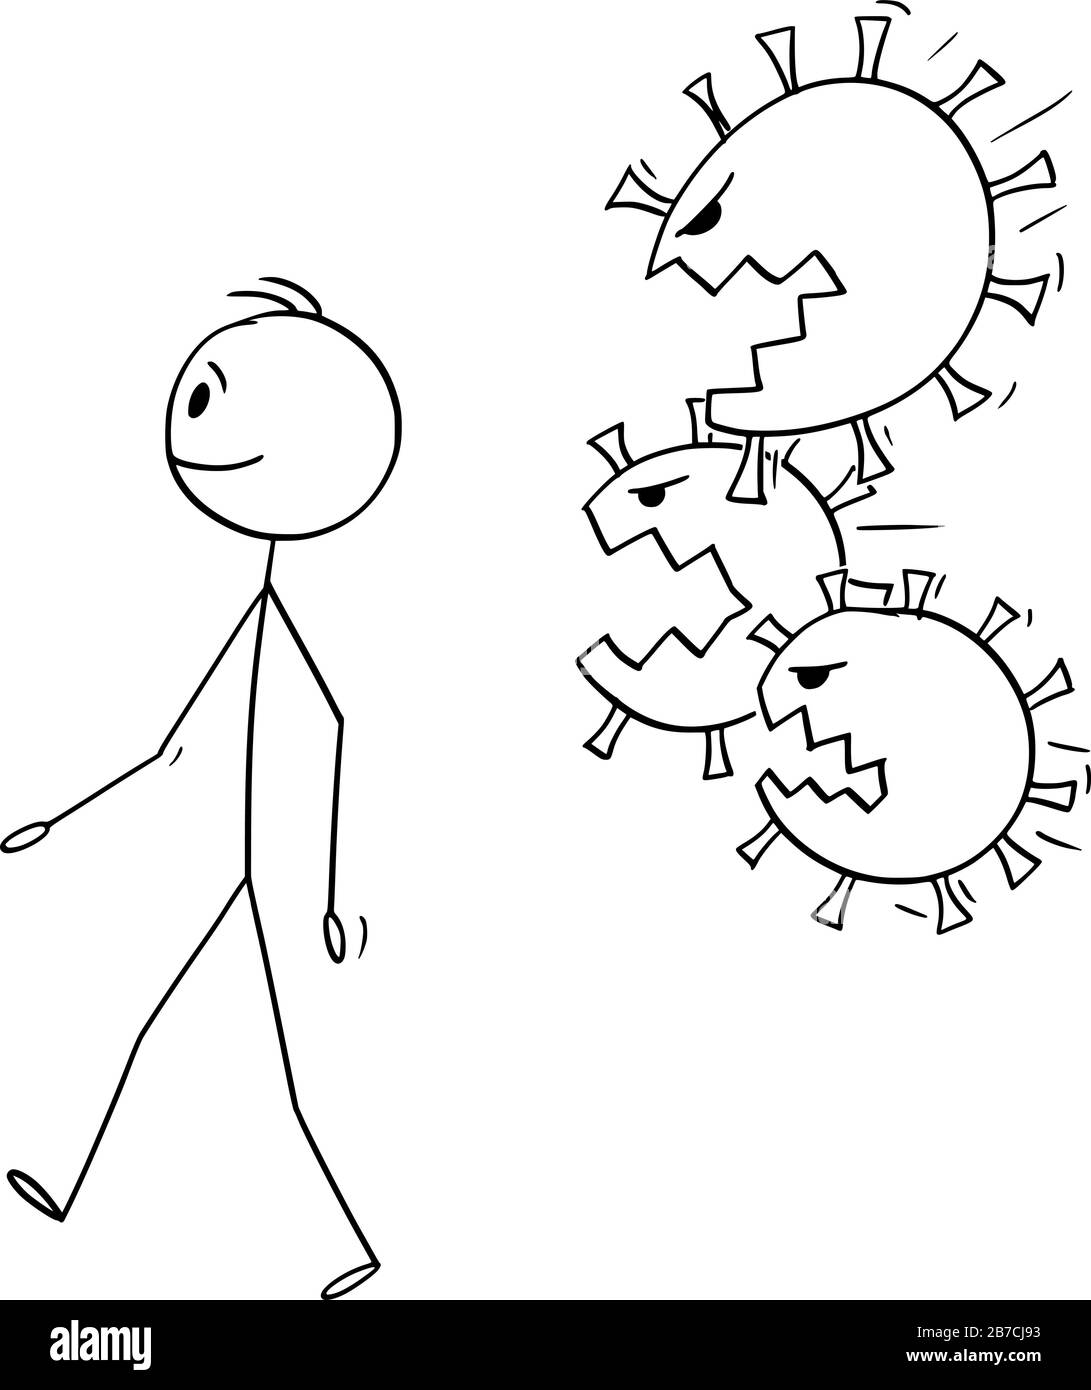 Dessin de dessin de dessin de dessin de dessin de dessin de dessin de dessin conceptuel de l'homme marchant ignorant alors que Coronavirus ou virus covid-19 l'attaque. Illustration de Vecteur